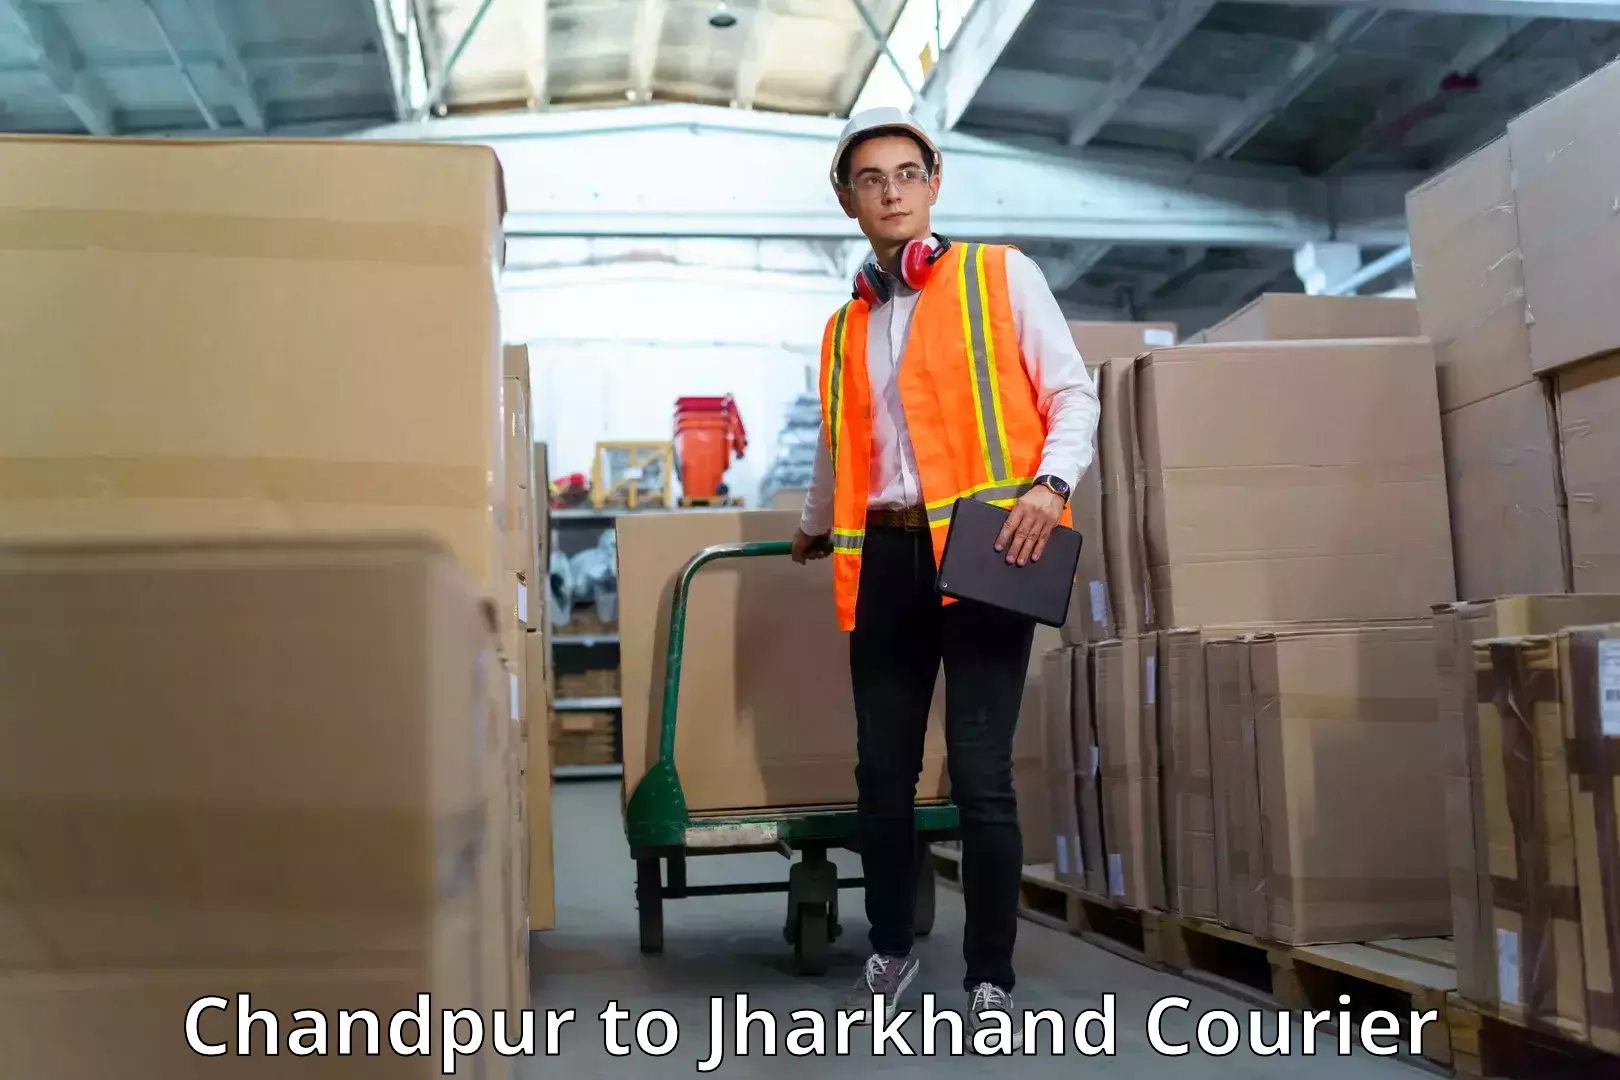 Courier service comparison Chandpur to Dhanbad